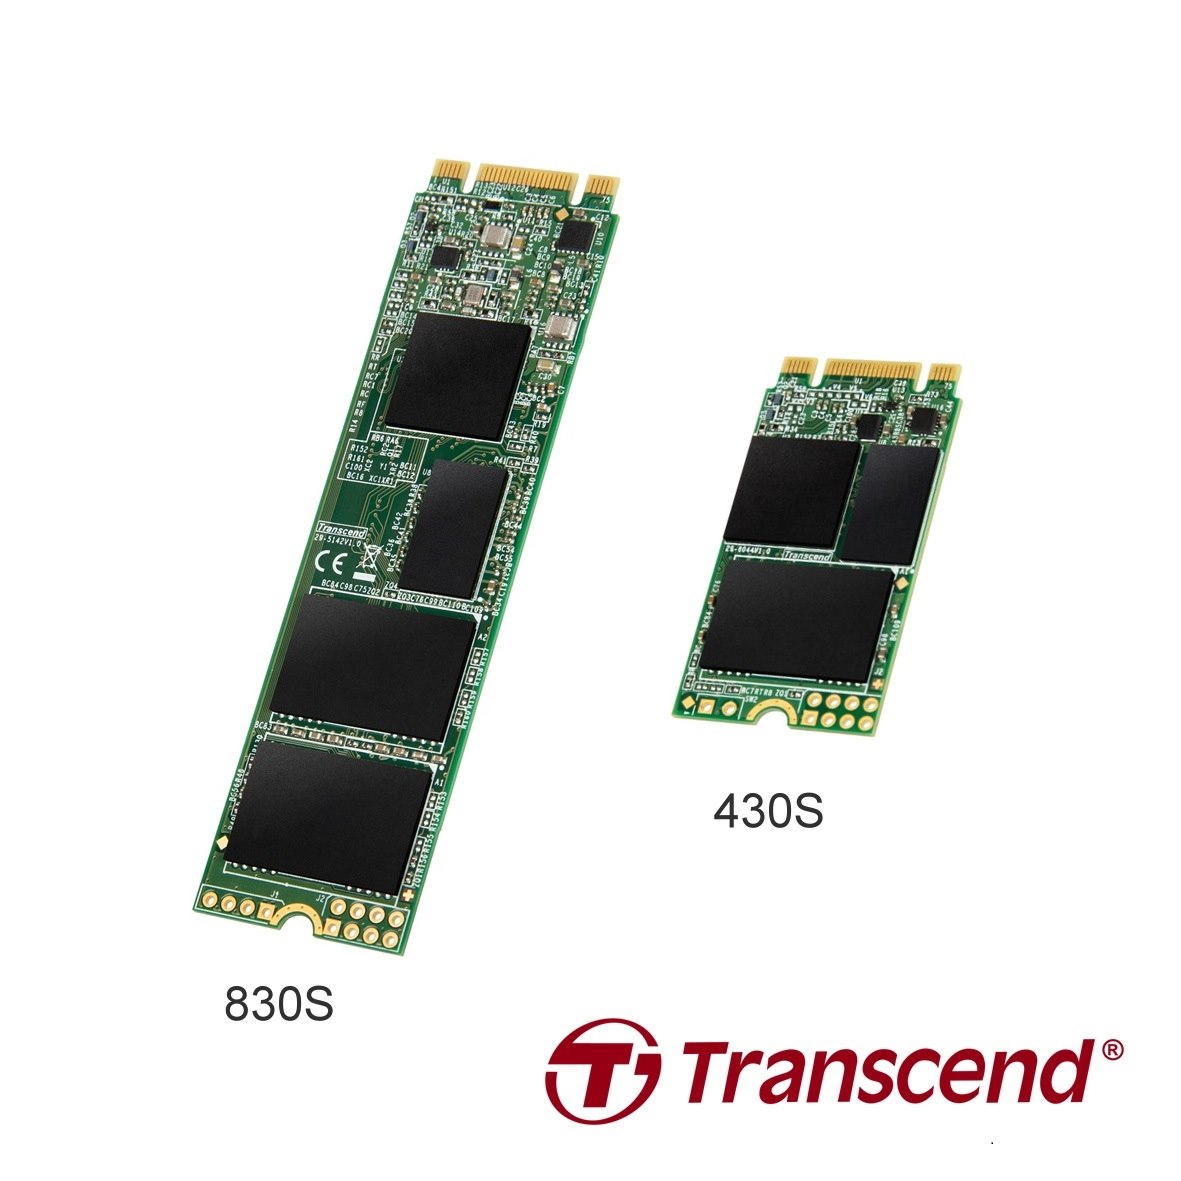 mts430s 830s pr ทรานส์เซนด์เปิดตัว M.2 SSD 430S และ 830S ไดร์ฟสำหรับฟอร์มแฟคเตอร์ขนาดเล็ก